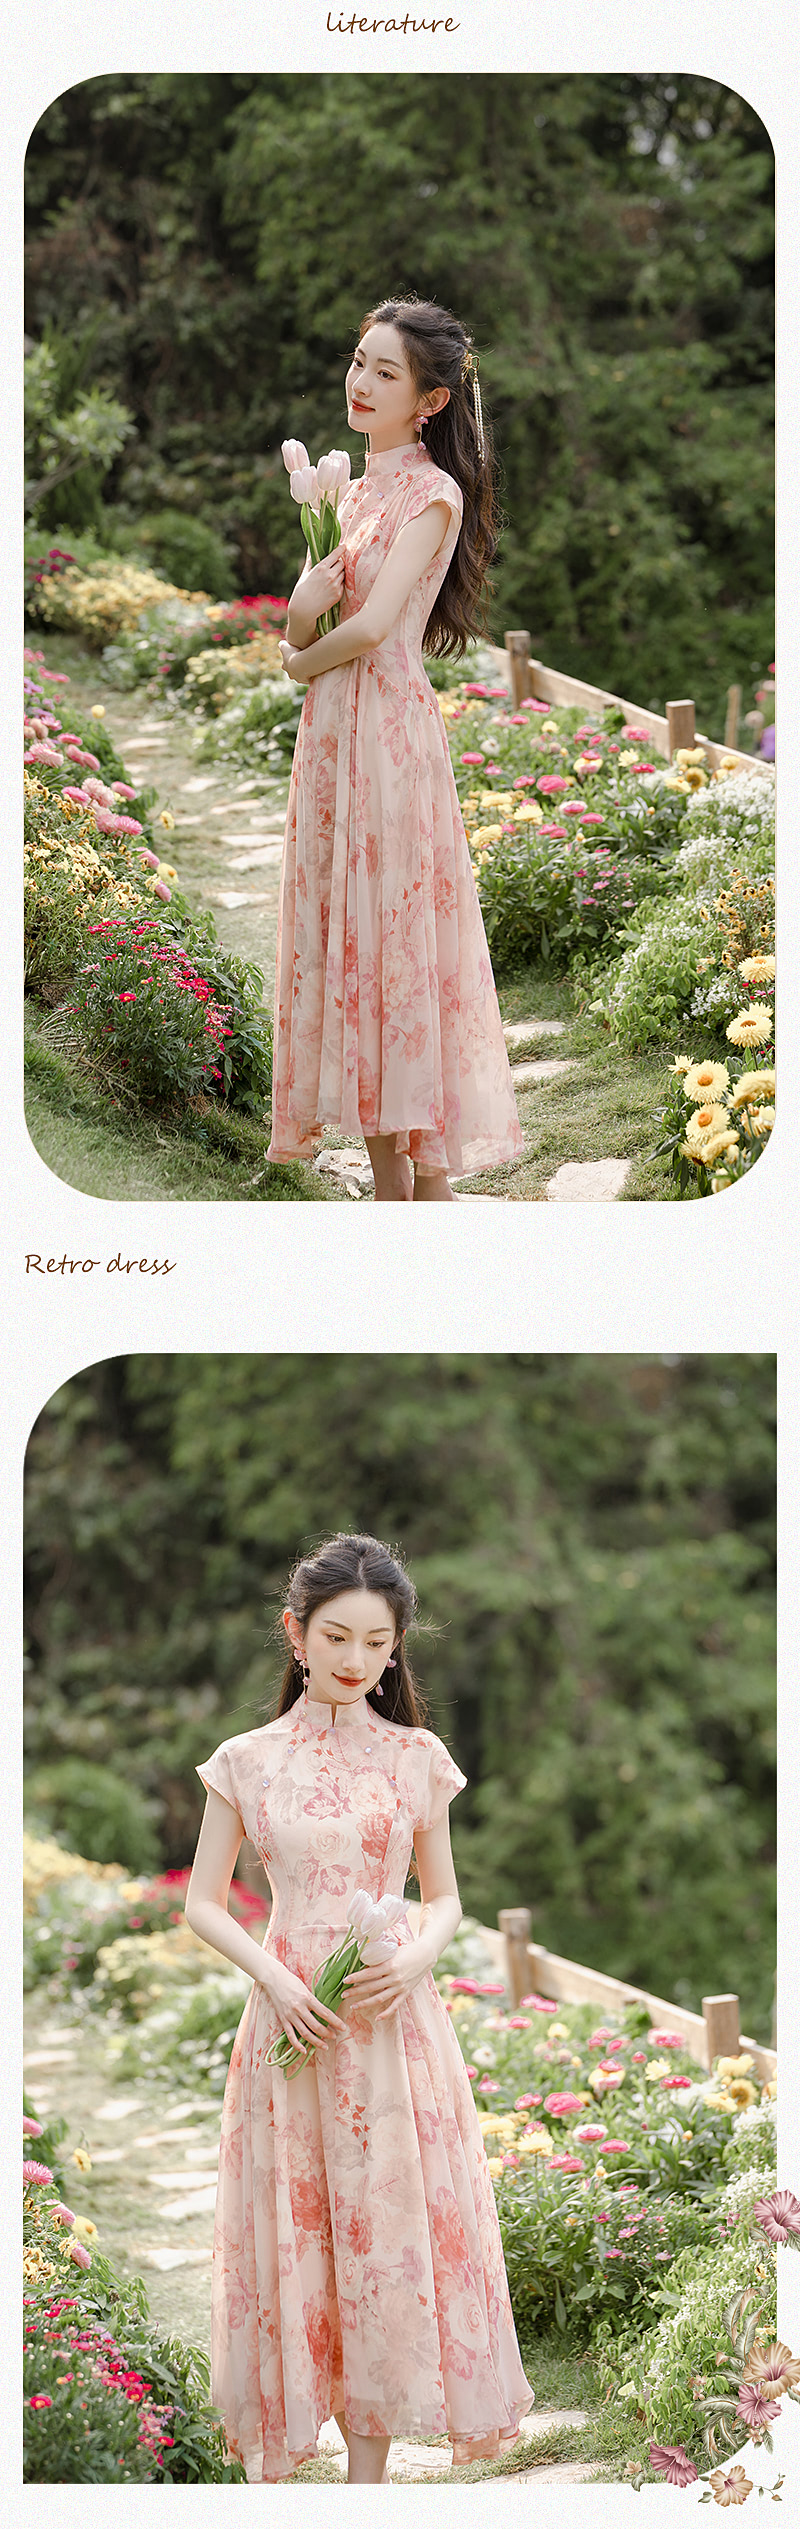 A-Line-Stand-Collar-Chiffon-Pink-Floral-Print-Summer-Maxi-Dress15